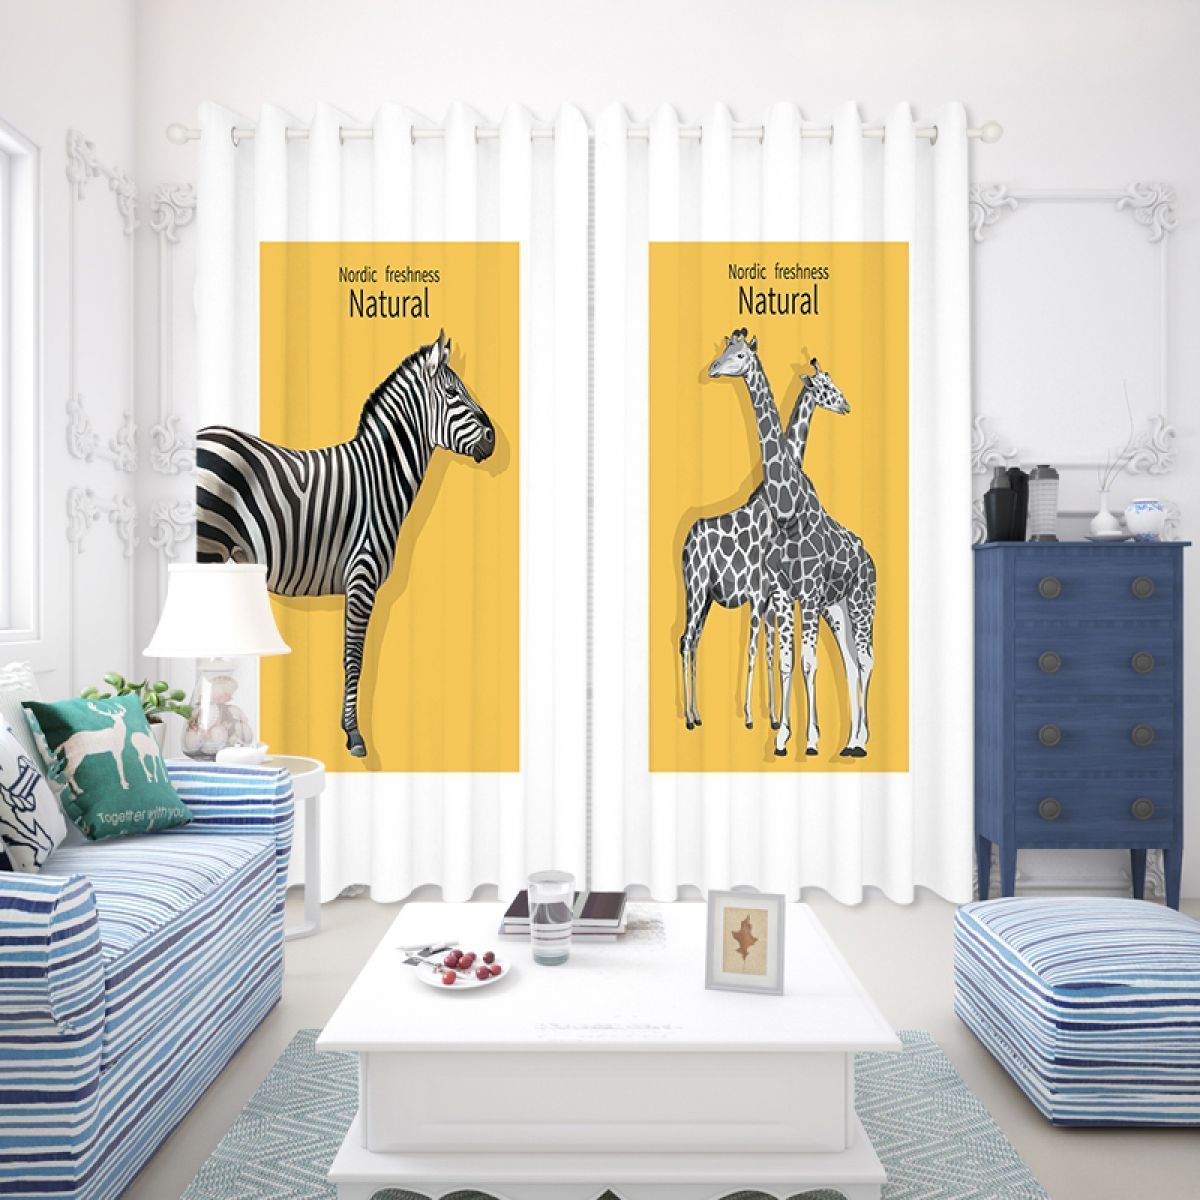 3d Zebra And Giraffe Printed Window Curtain Home Decor